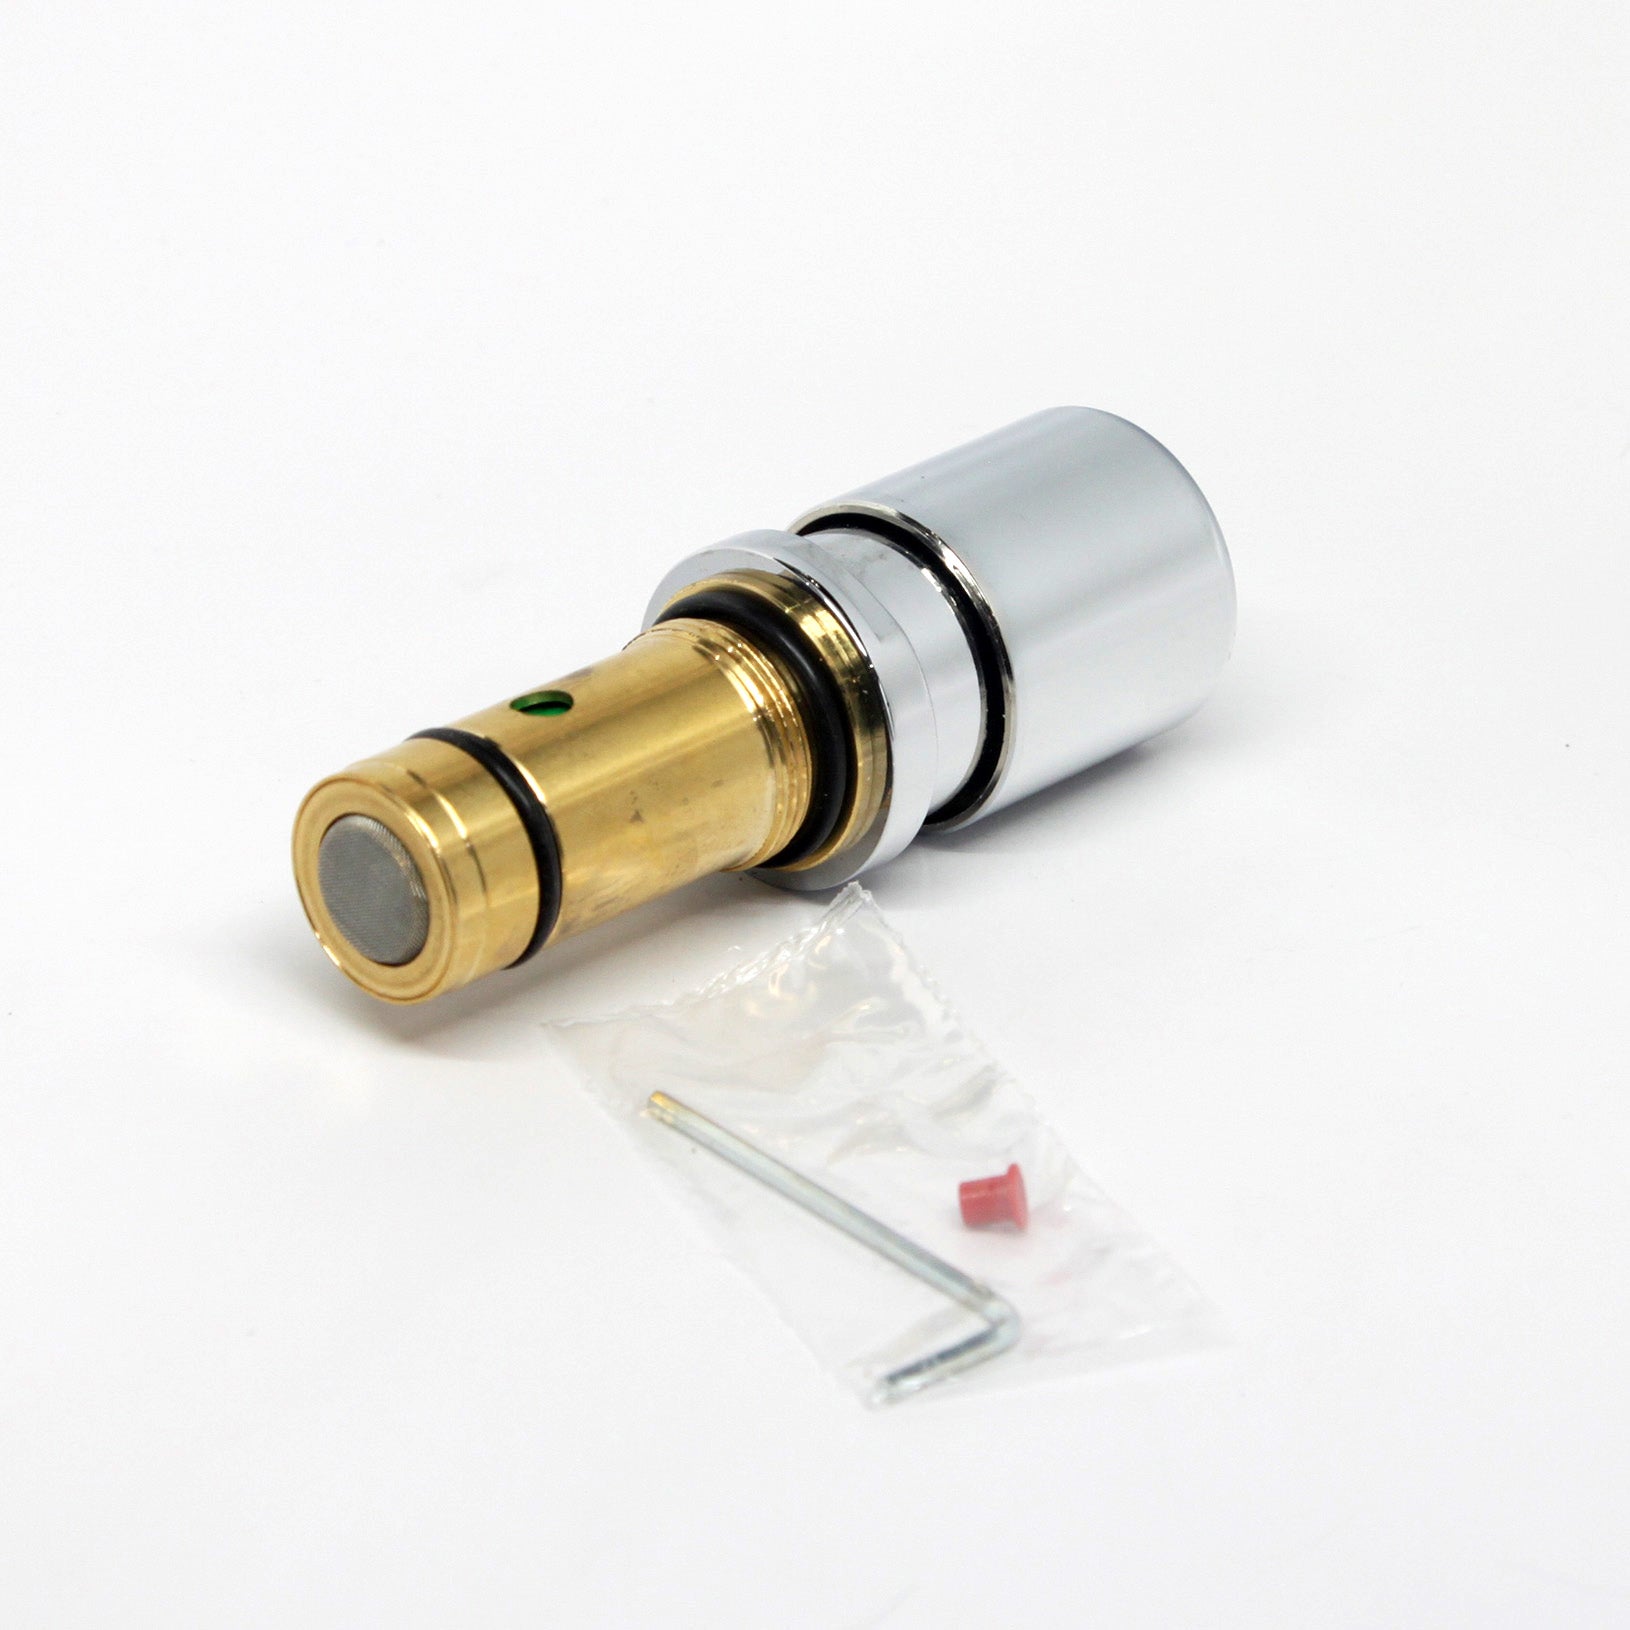 P2402 - Slow Close Cartridge for Wash Basin Pushbutton Faucet